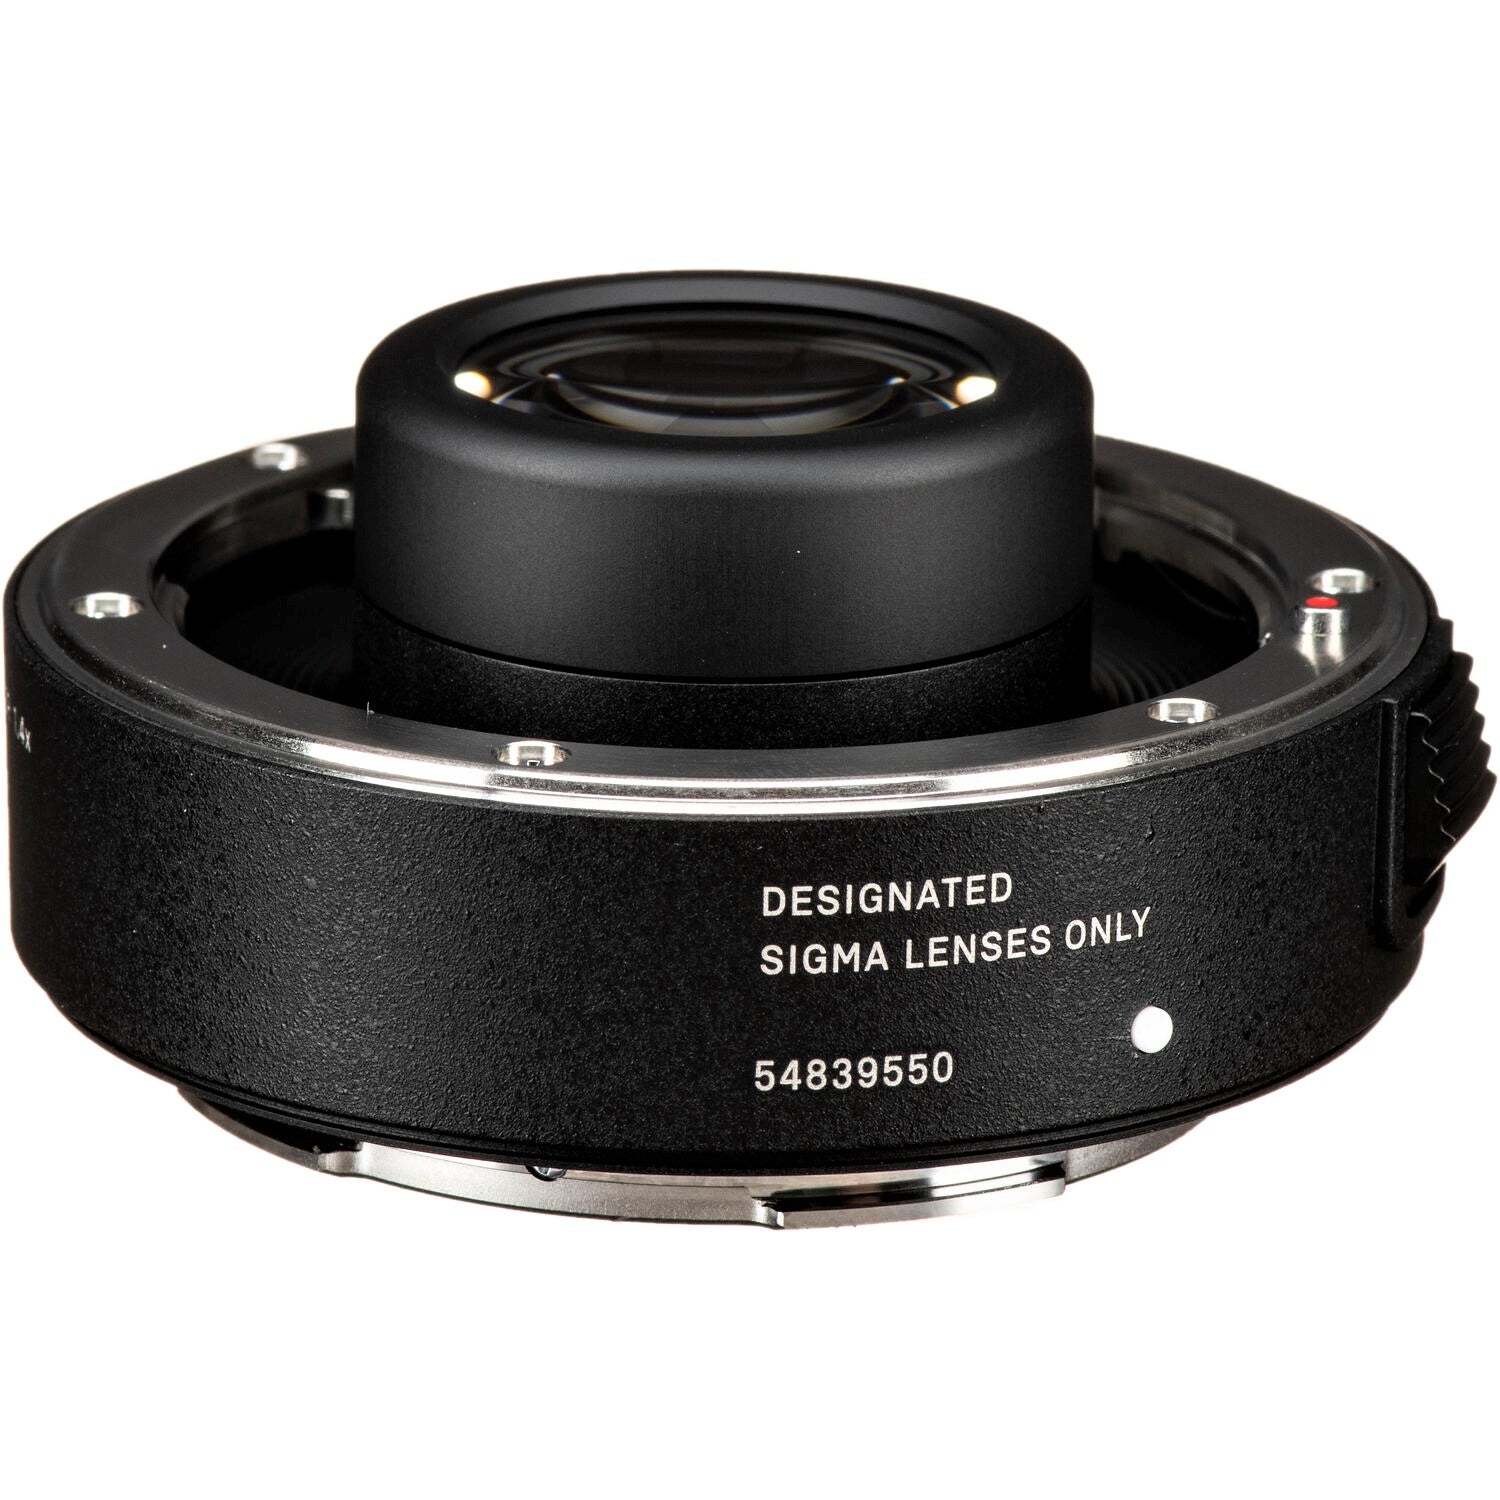 1.4x Teleconverter for Leica L